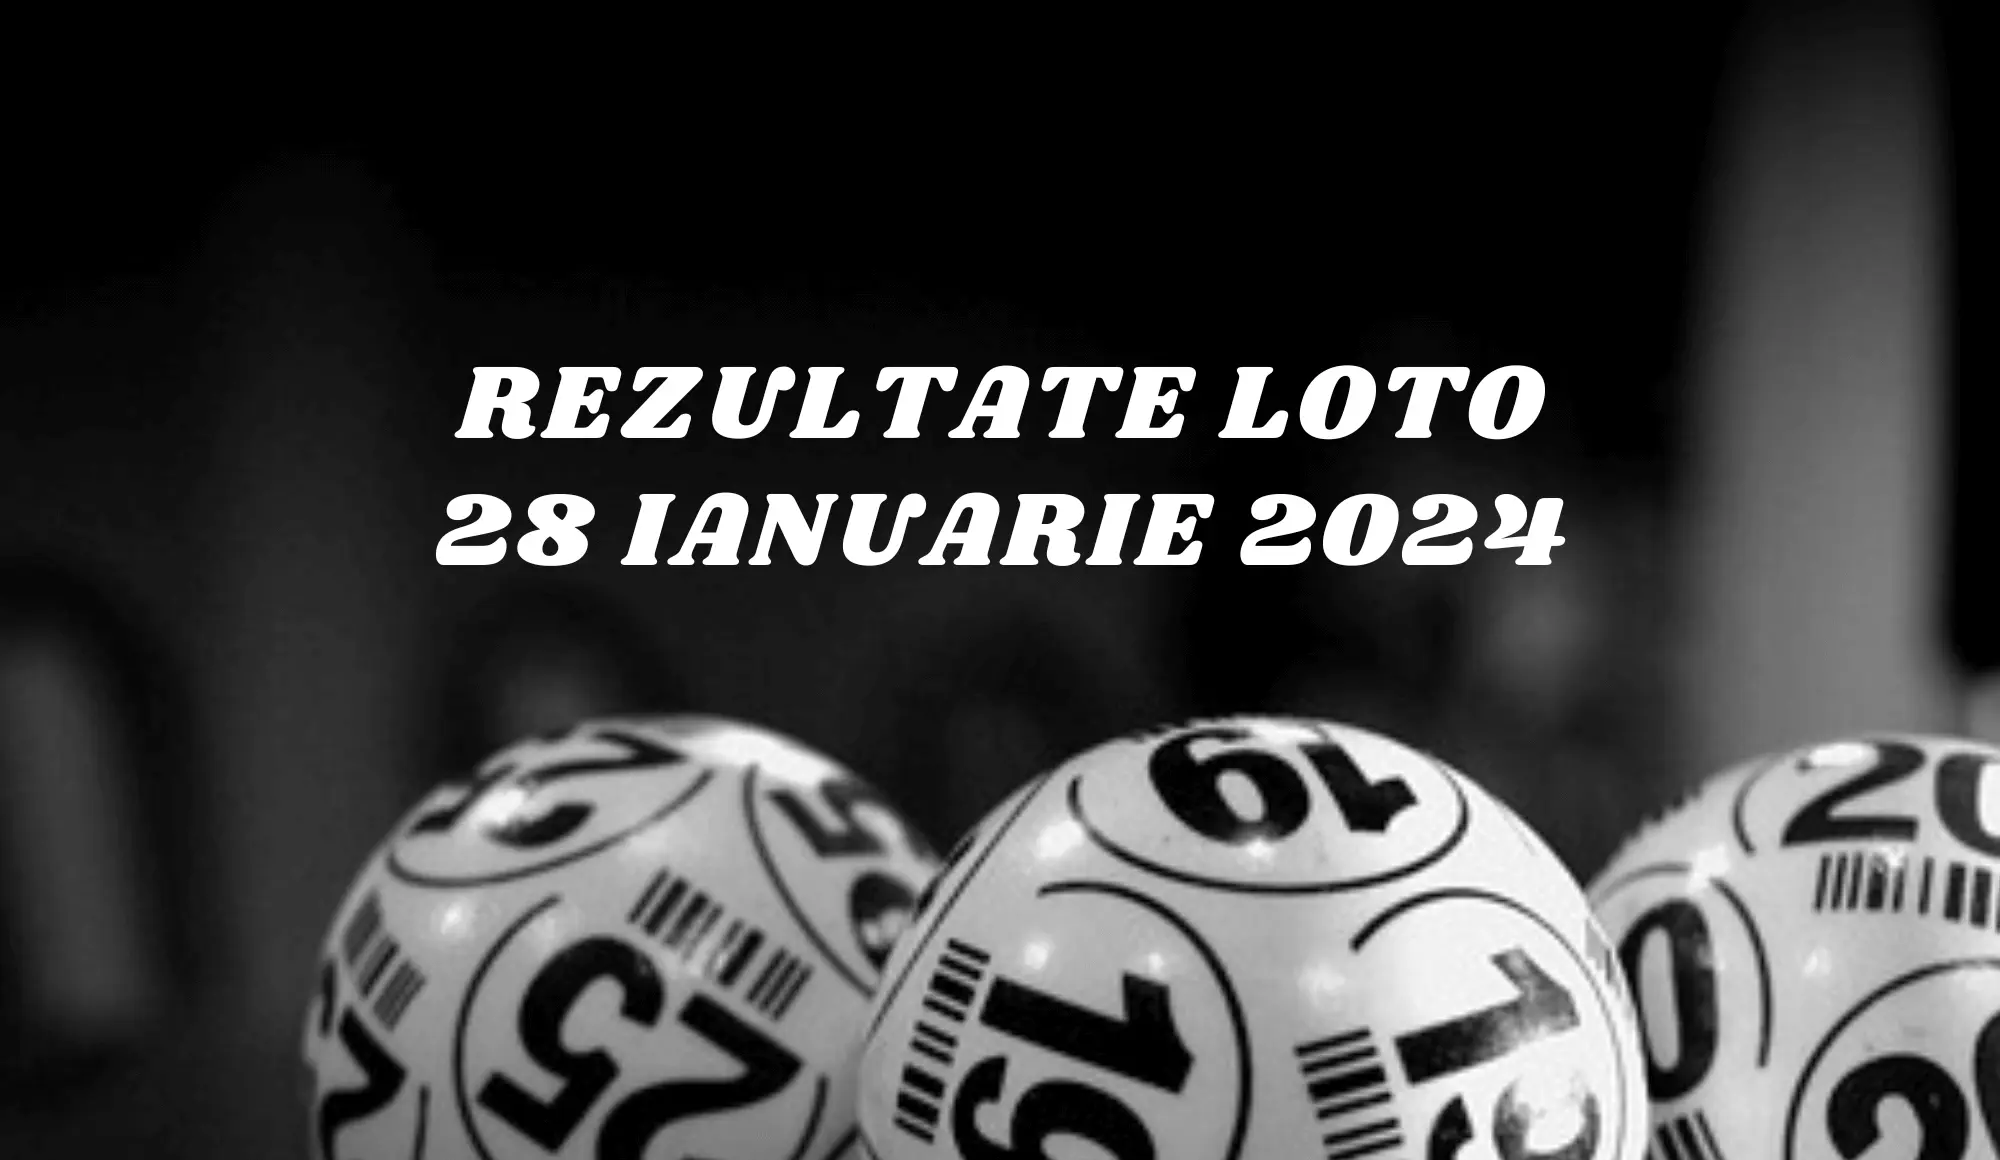 Rezultate Loto 28 ianuarie 2024 – Loto 6/49, Loto 5/40, Joker și Noroc